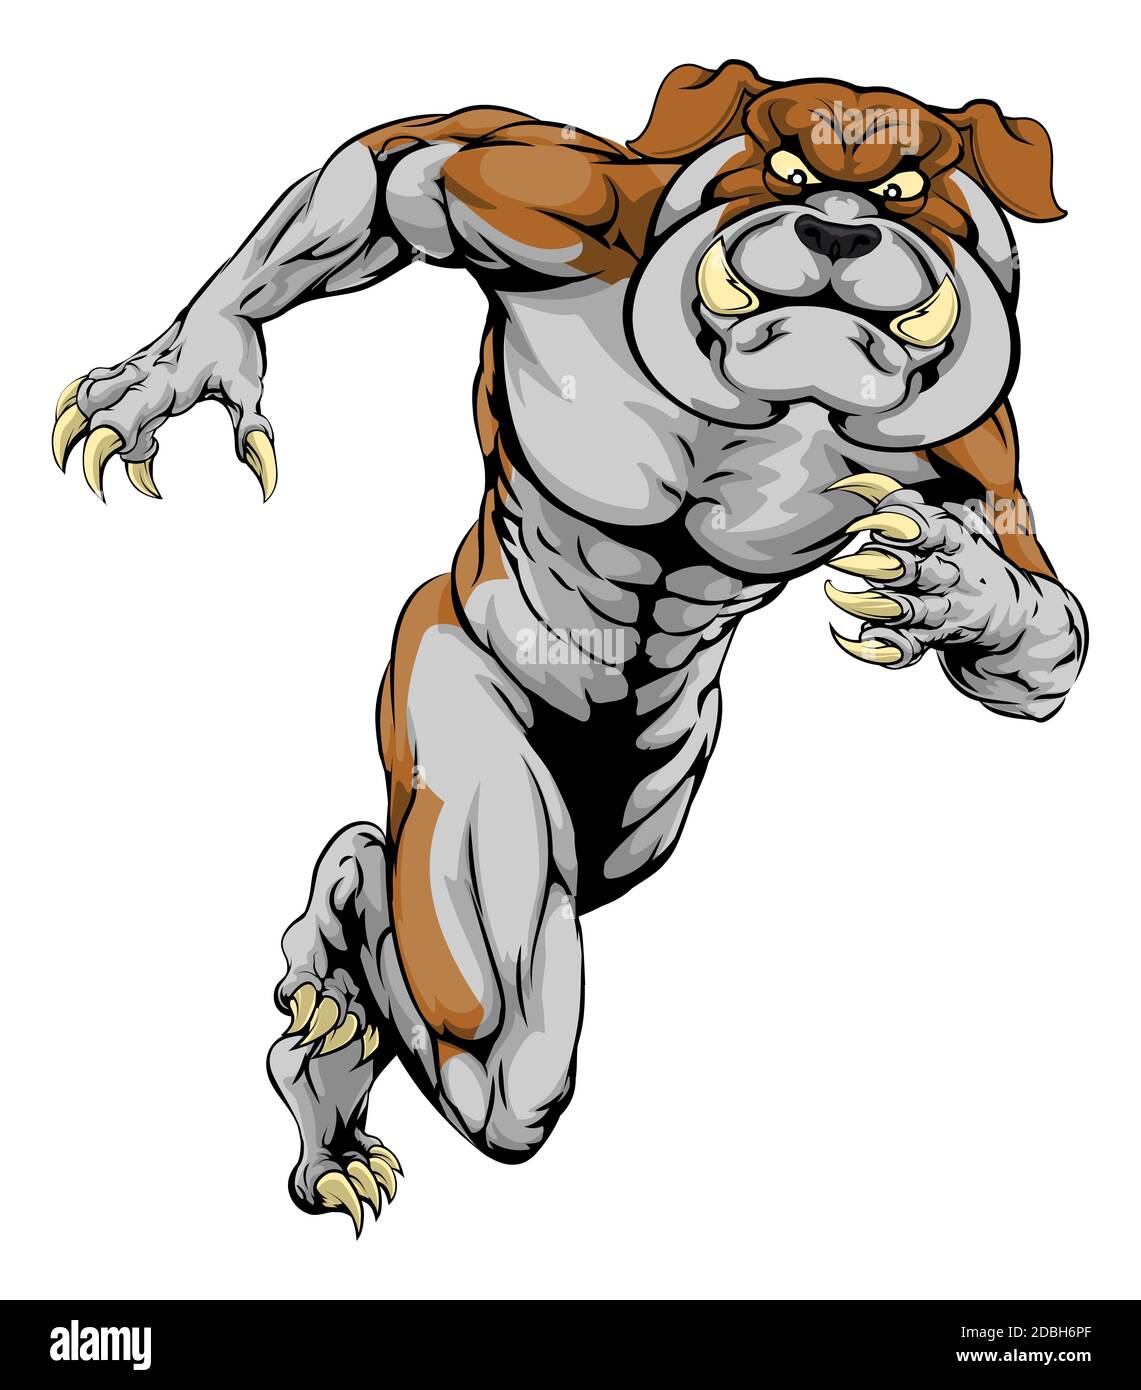 An illustration of a scary bulldog sports mascot running Stock Photo